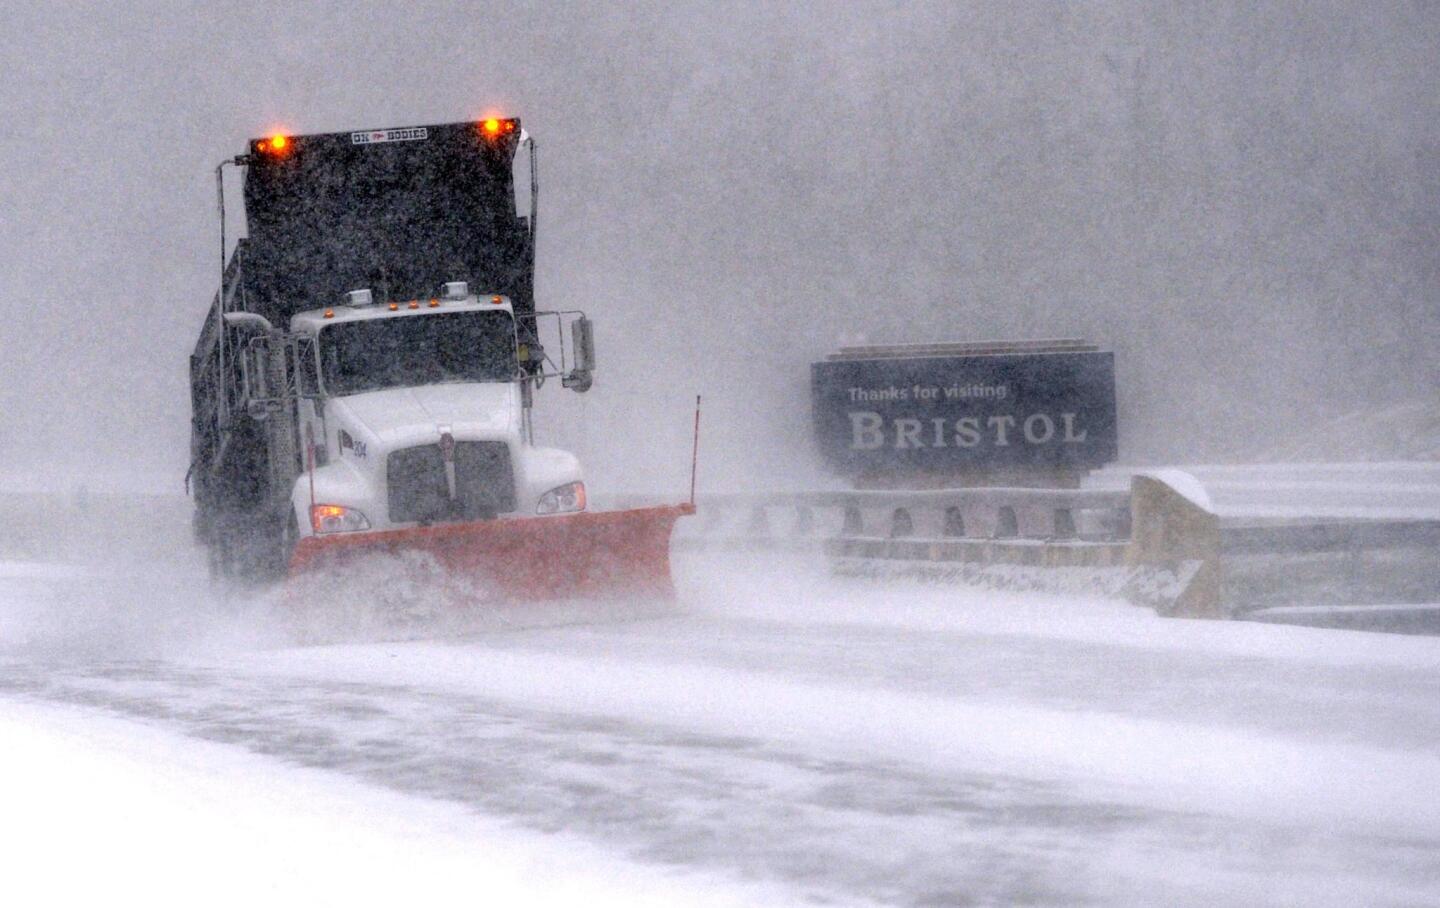 East Coast braces for major snowstorm